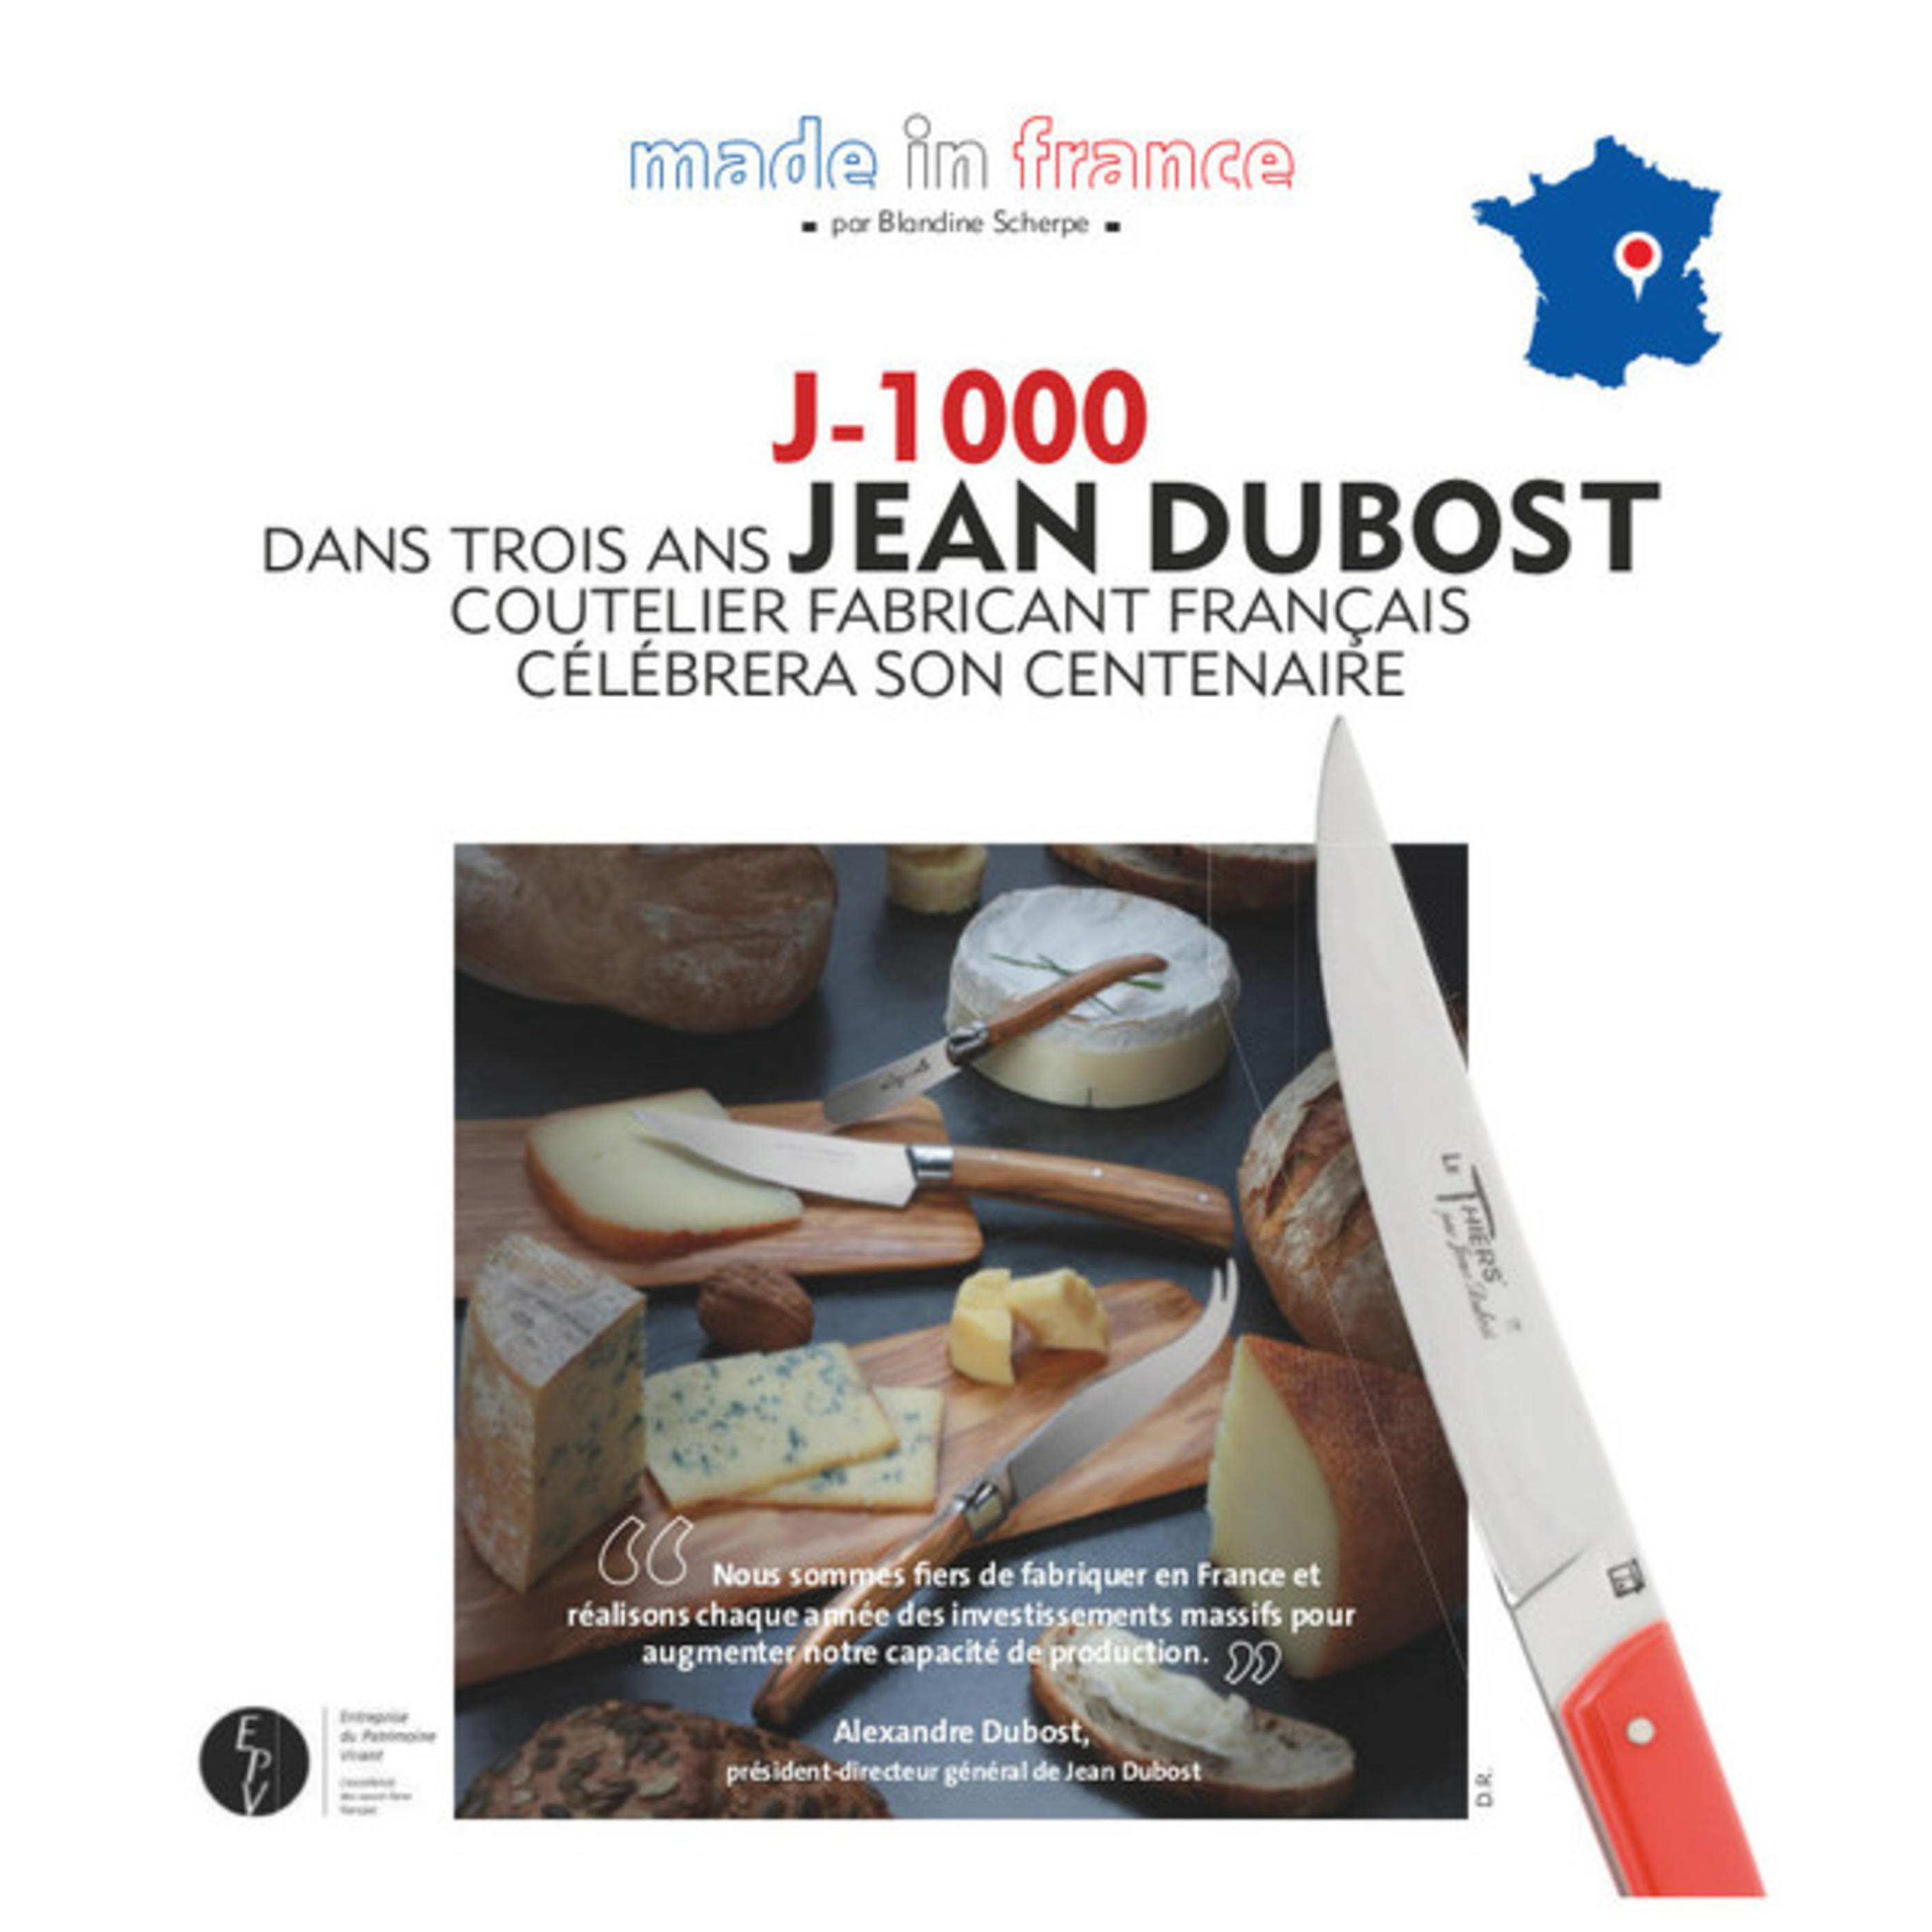 Jean Dubost coutellerie française d'excellence, Home Fashion News, Mai 2017